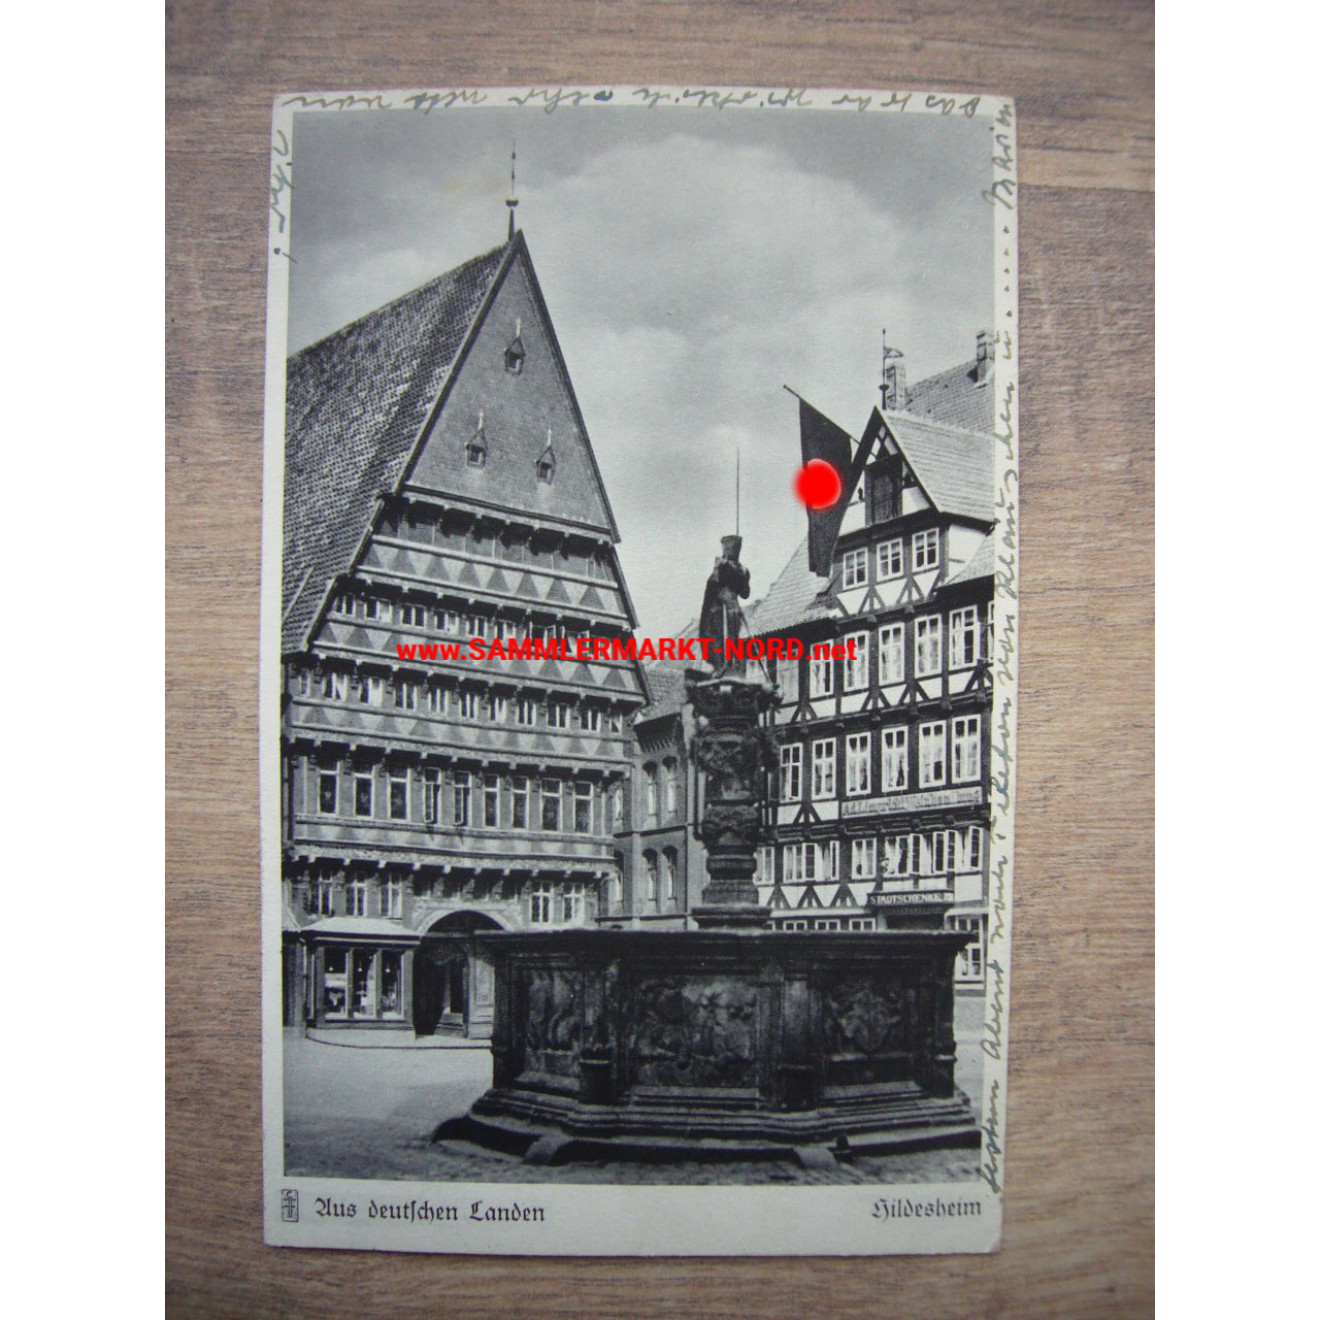 Hildesheim - Knochenhauer office building with swastika flag